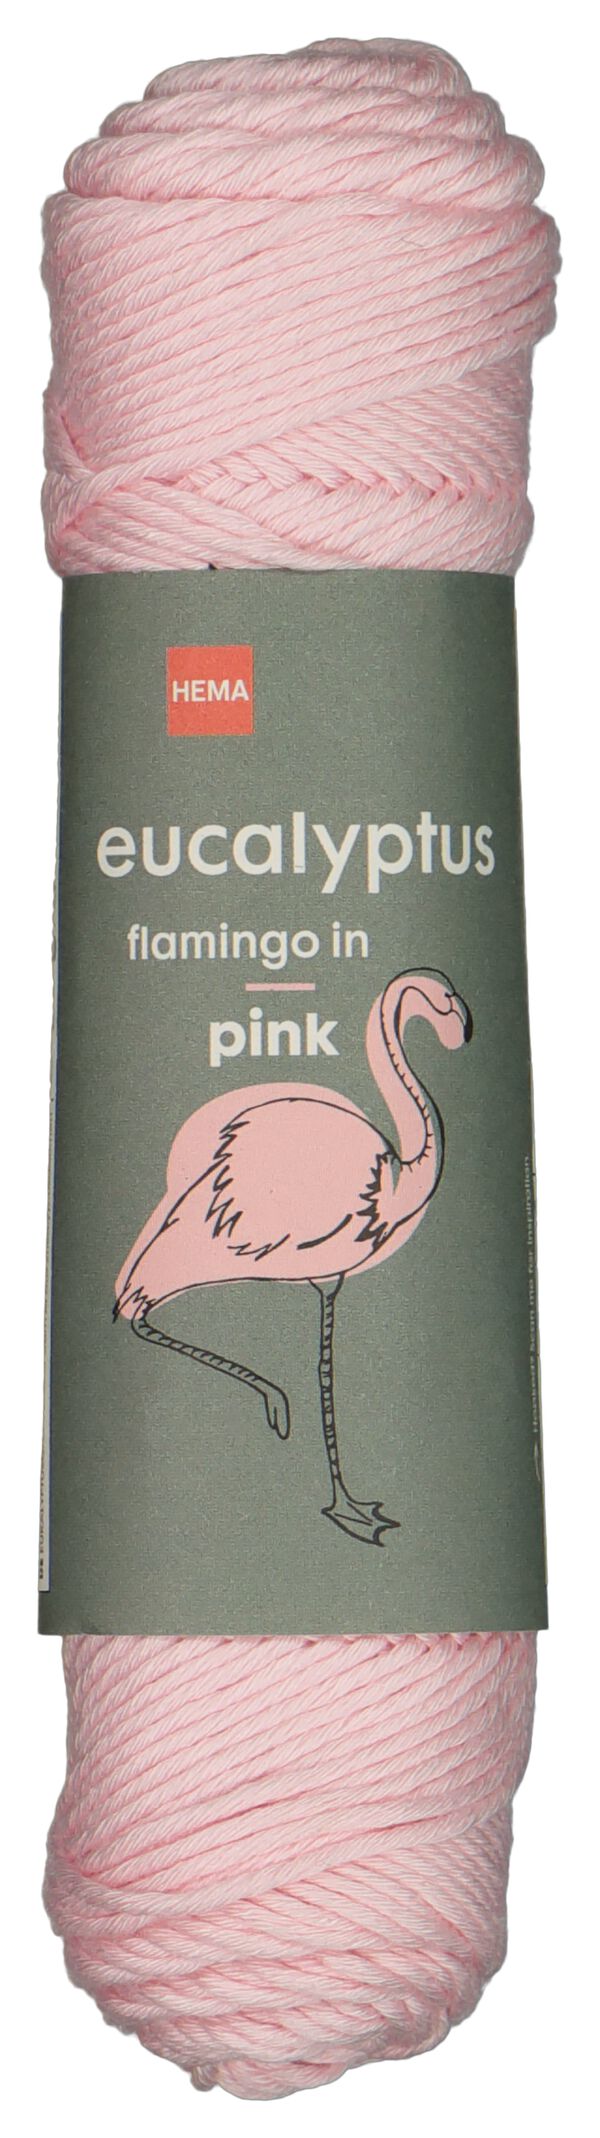 brei en haakgaren eucalyptus 50gr/83m roze roze eucalyptus - 1400209 - HEMA